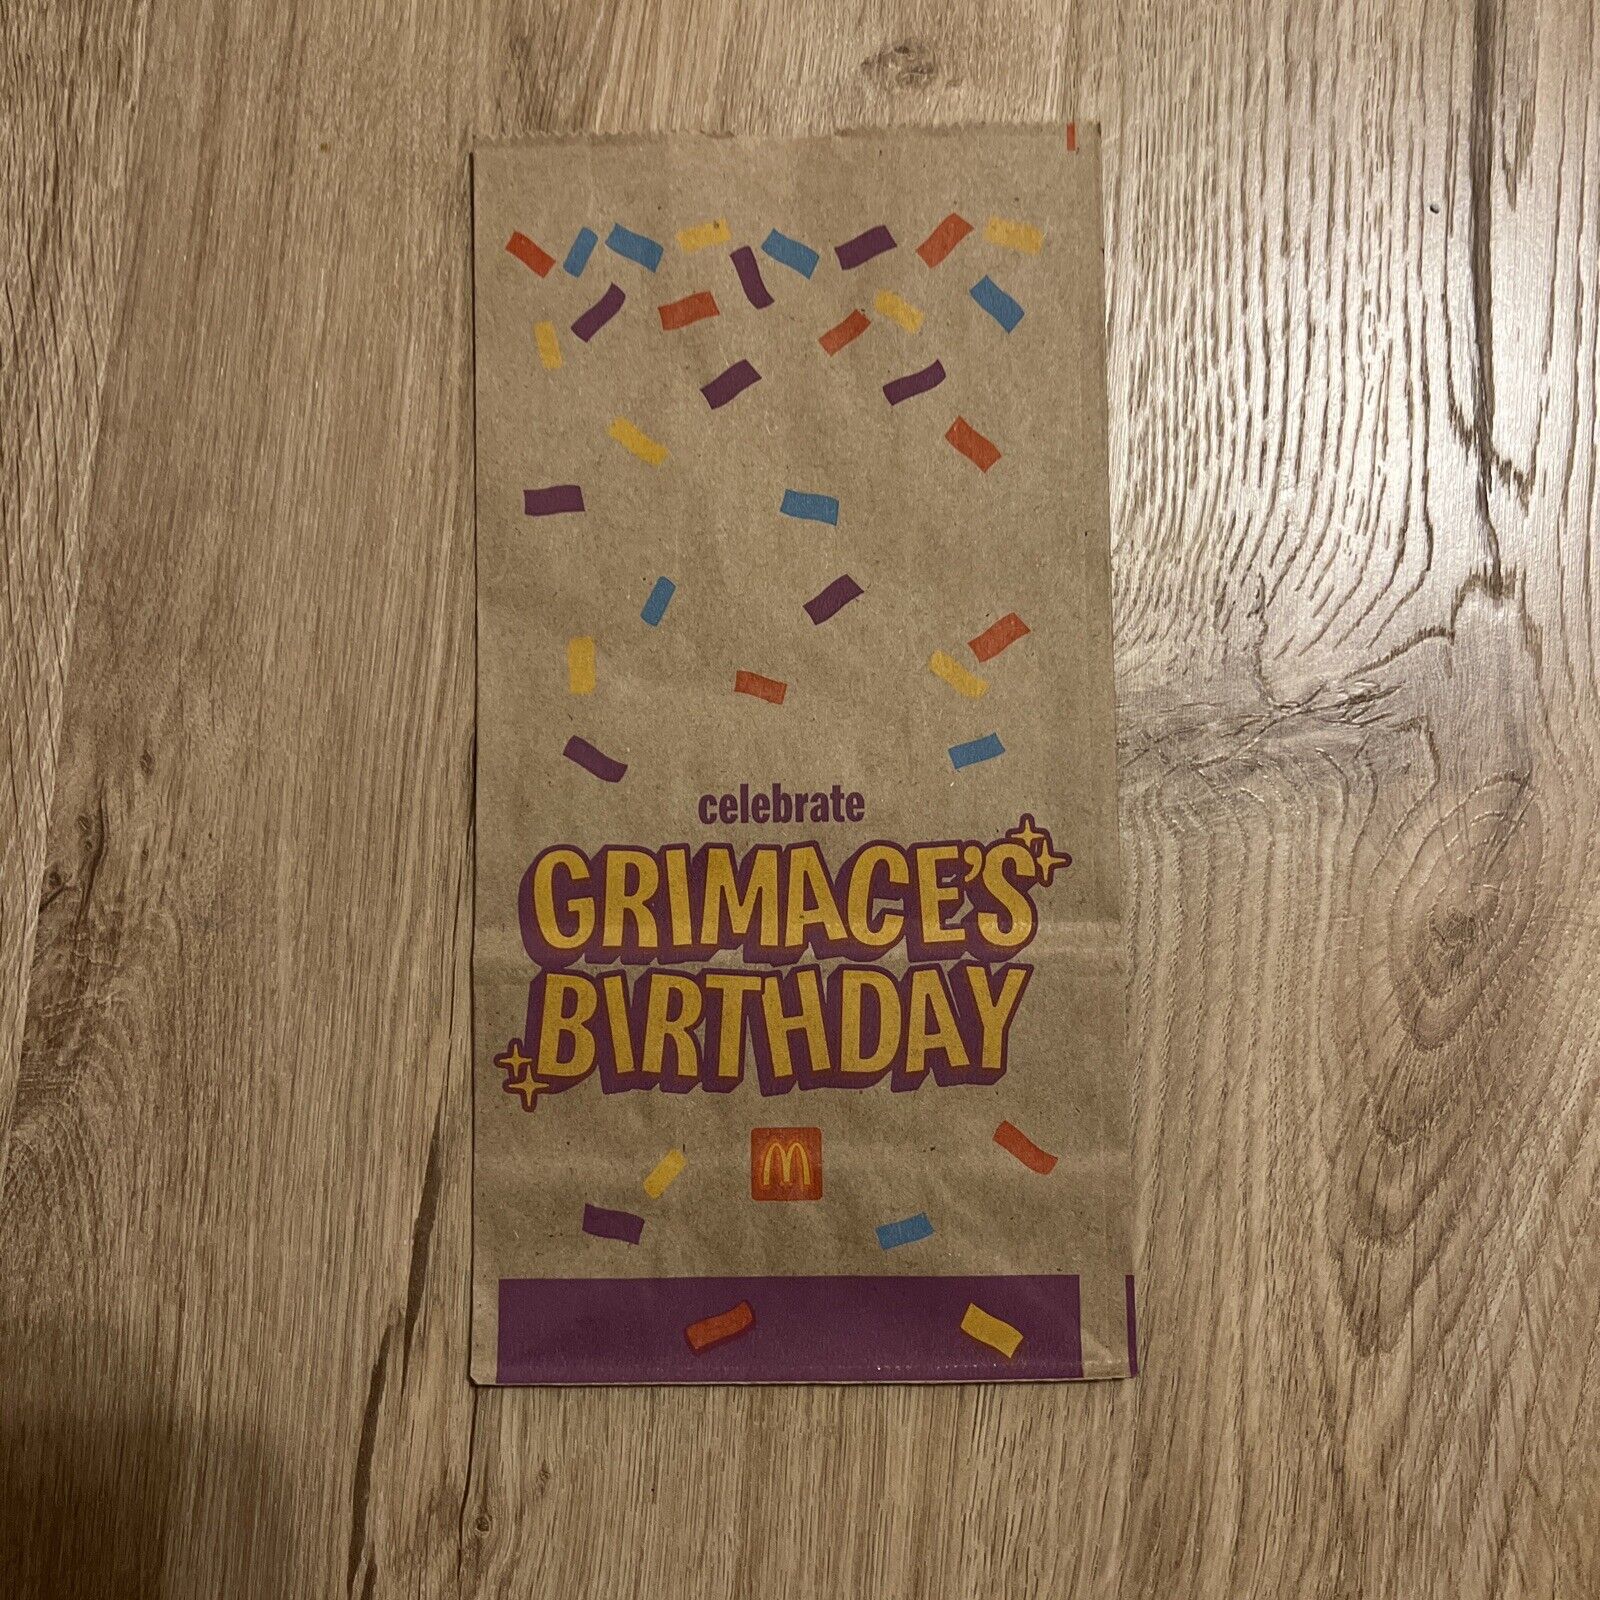 McDonald’s Celebrate Grimace’s Birthday  Promo Brown Paper Bag - 